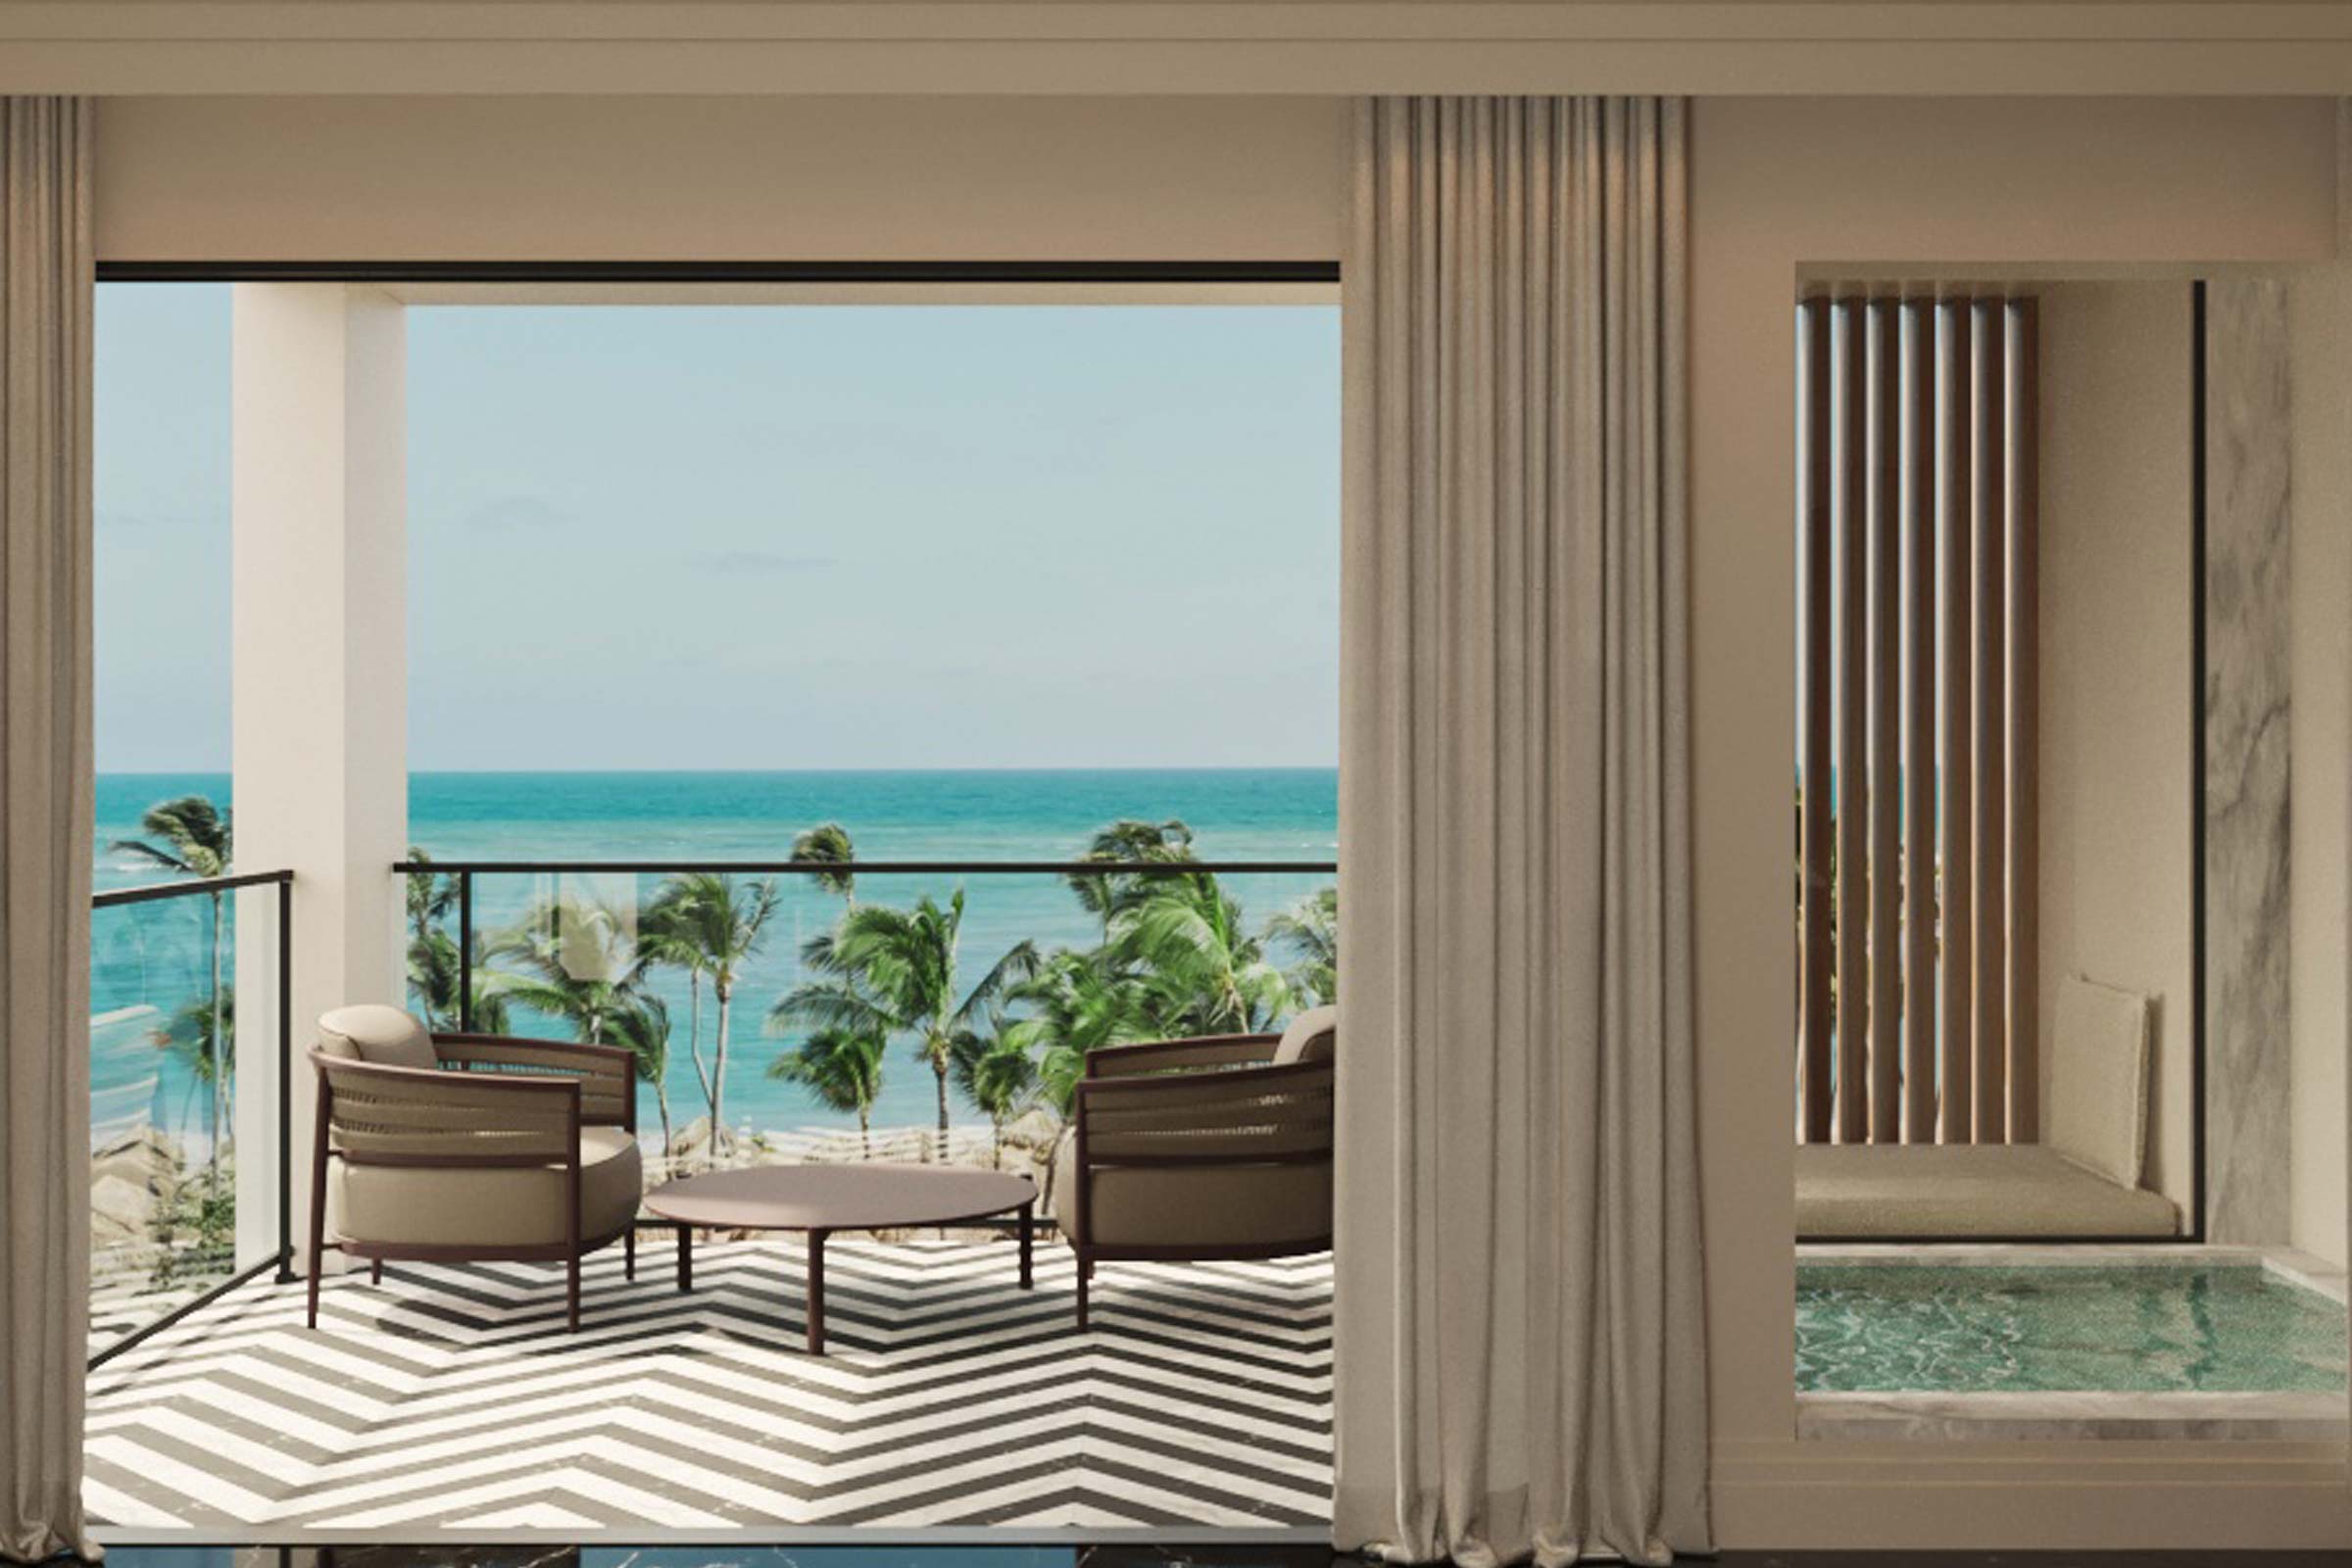 Terrace overlooking the Cancun ocean